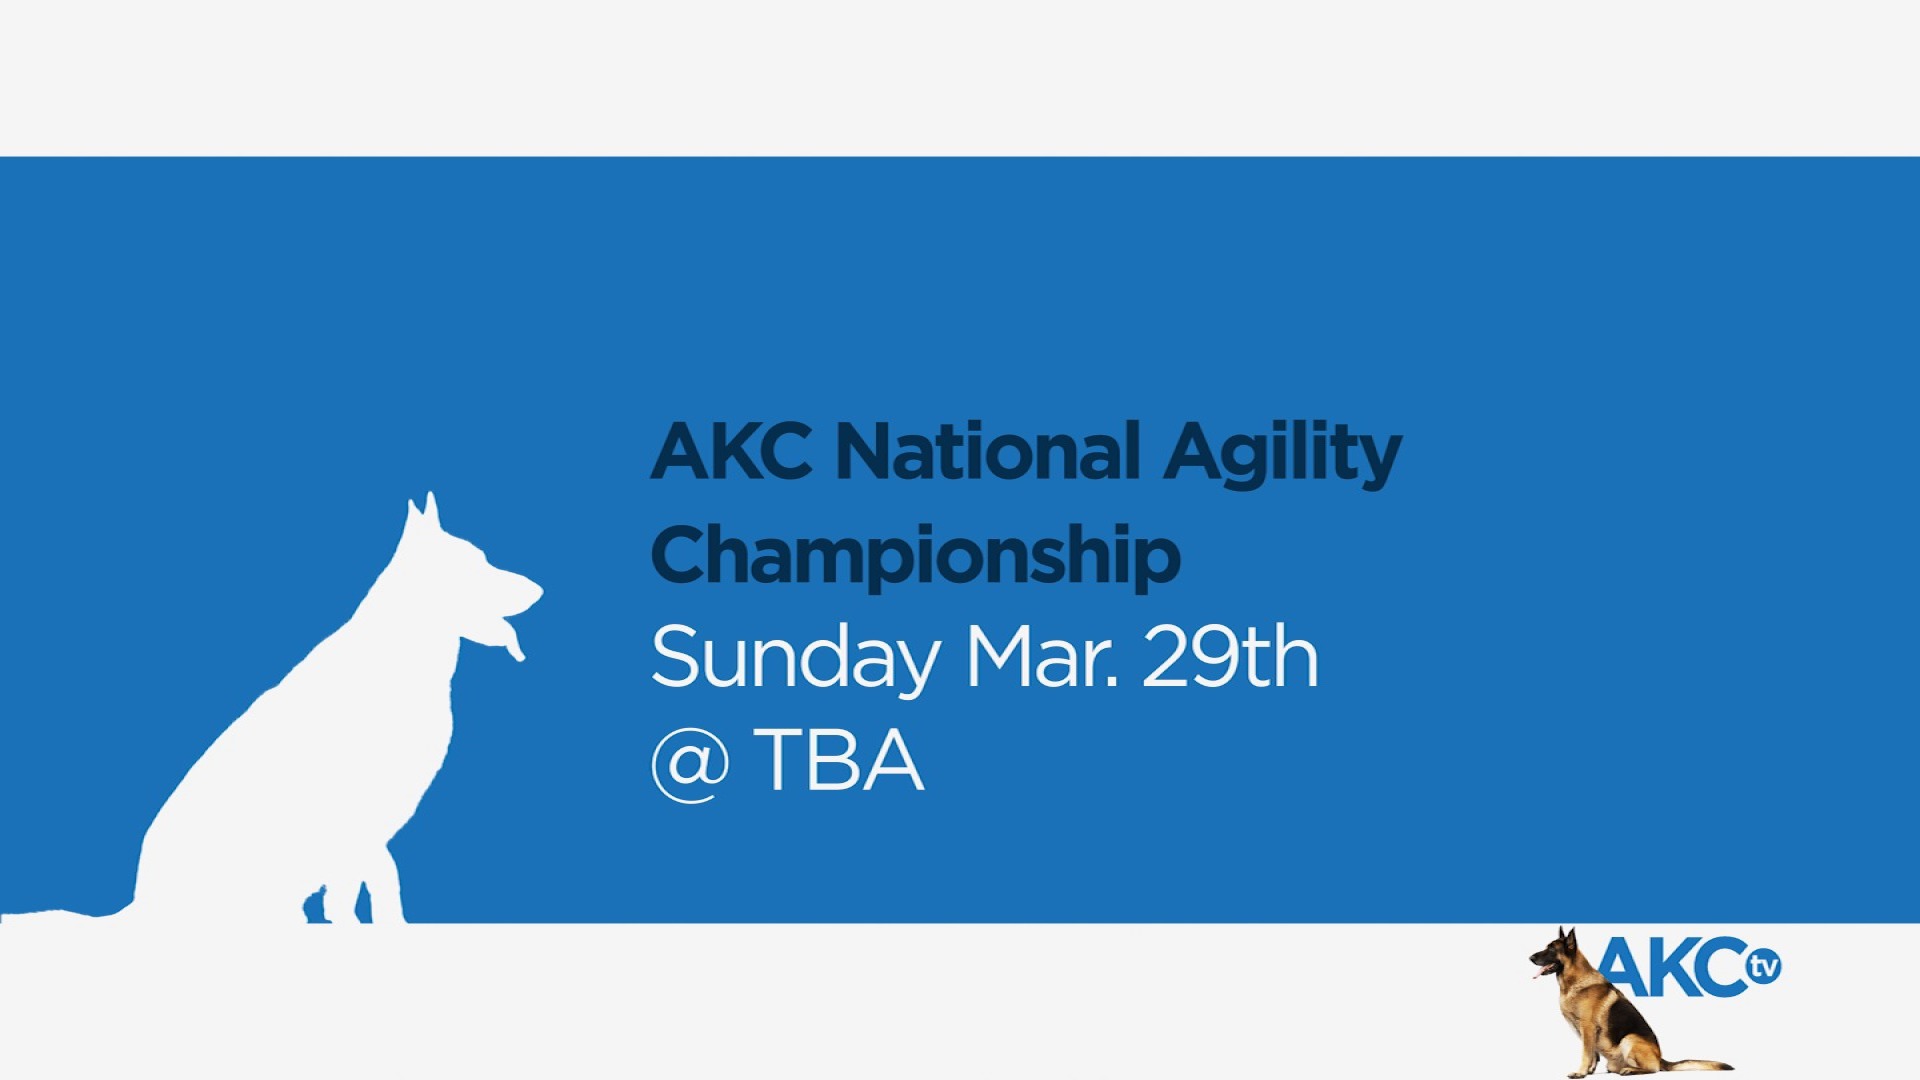 AKC.TV Sunday March 29th AKC National Agility Championship, Live